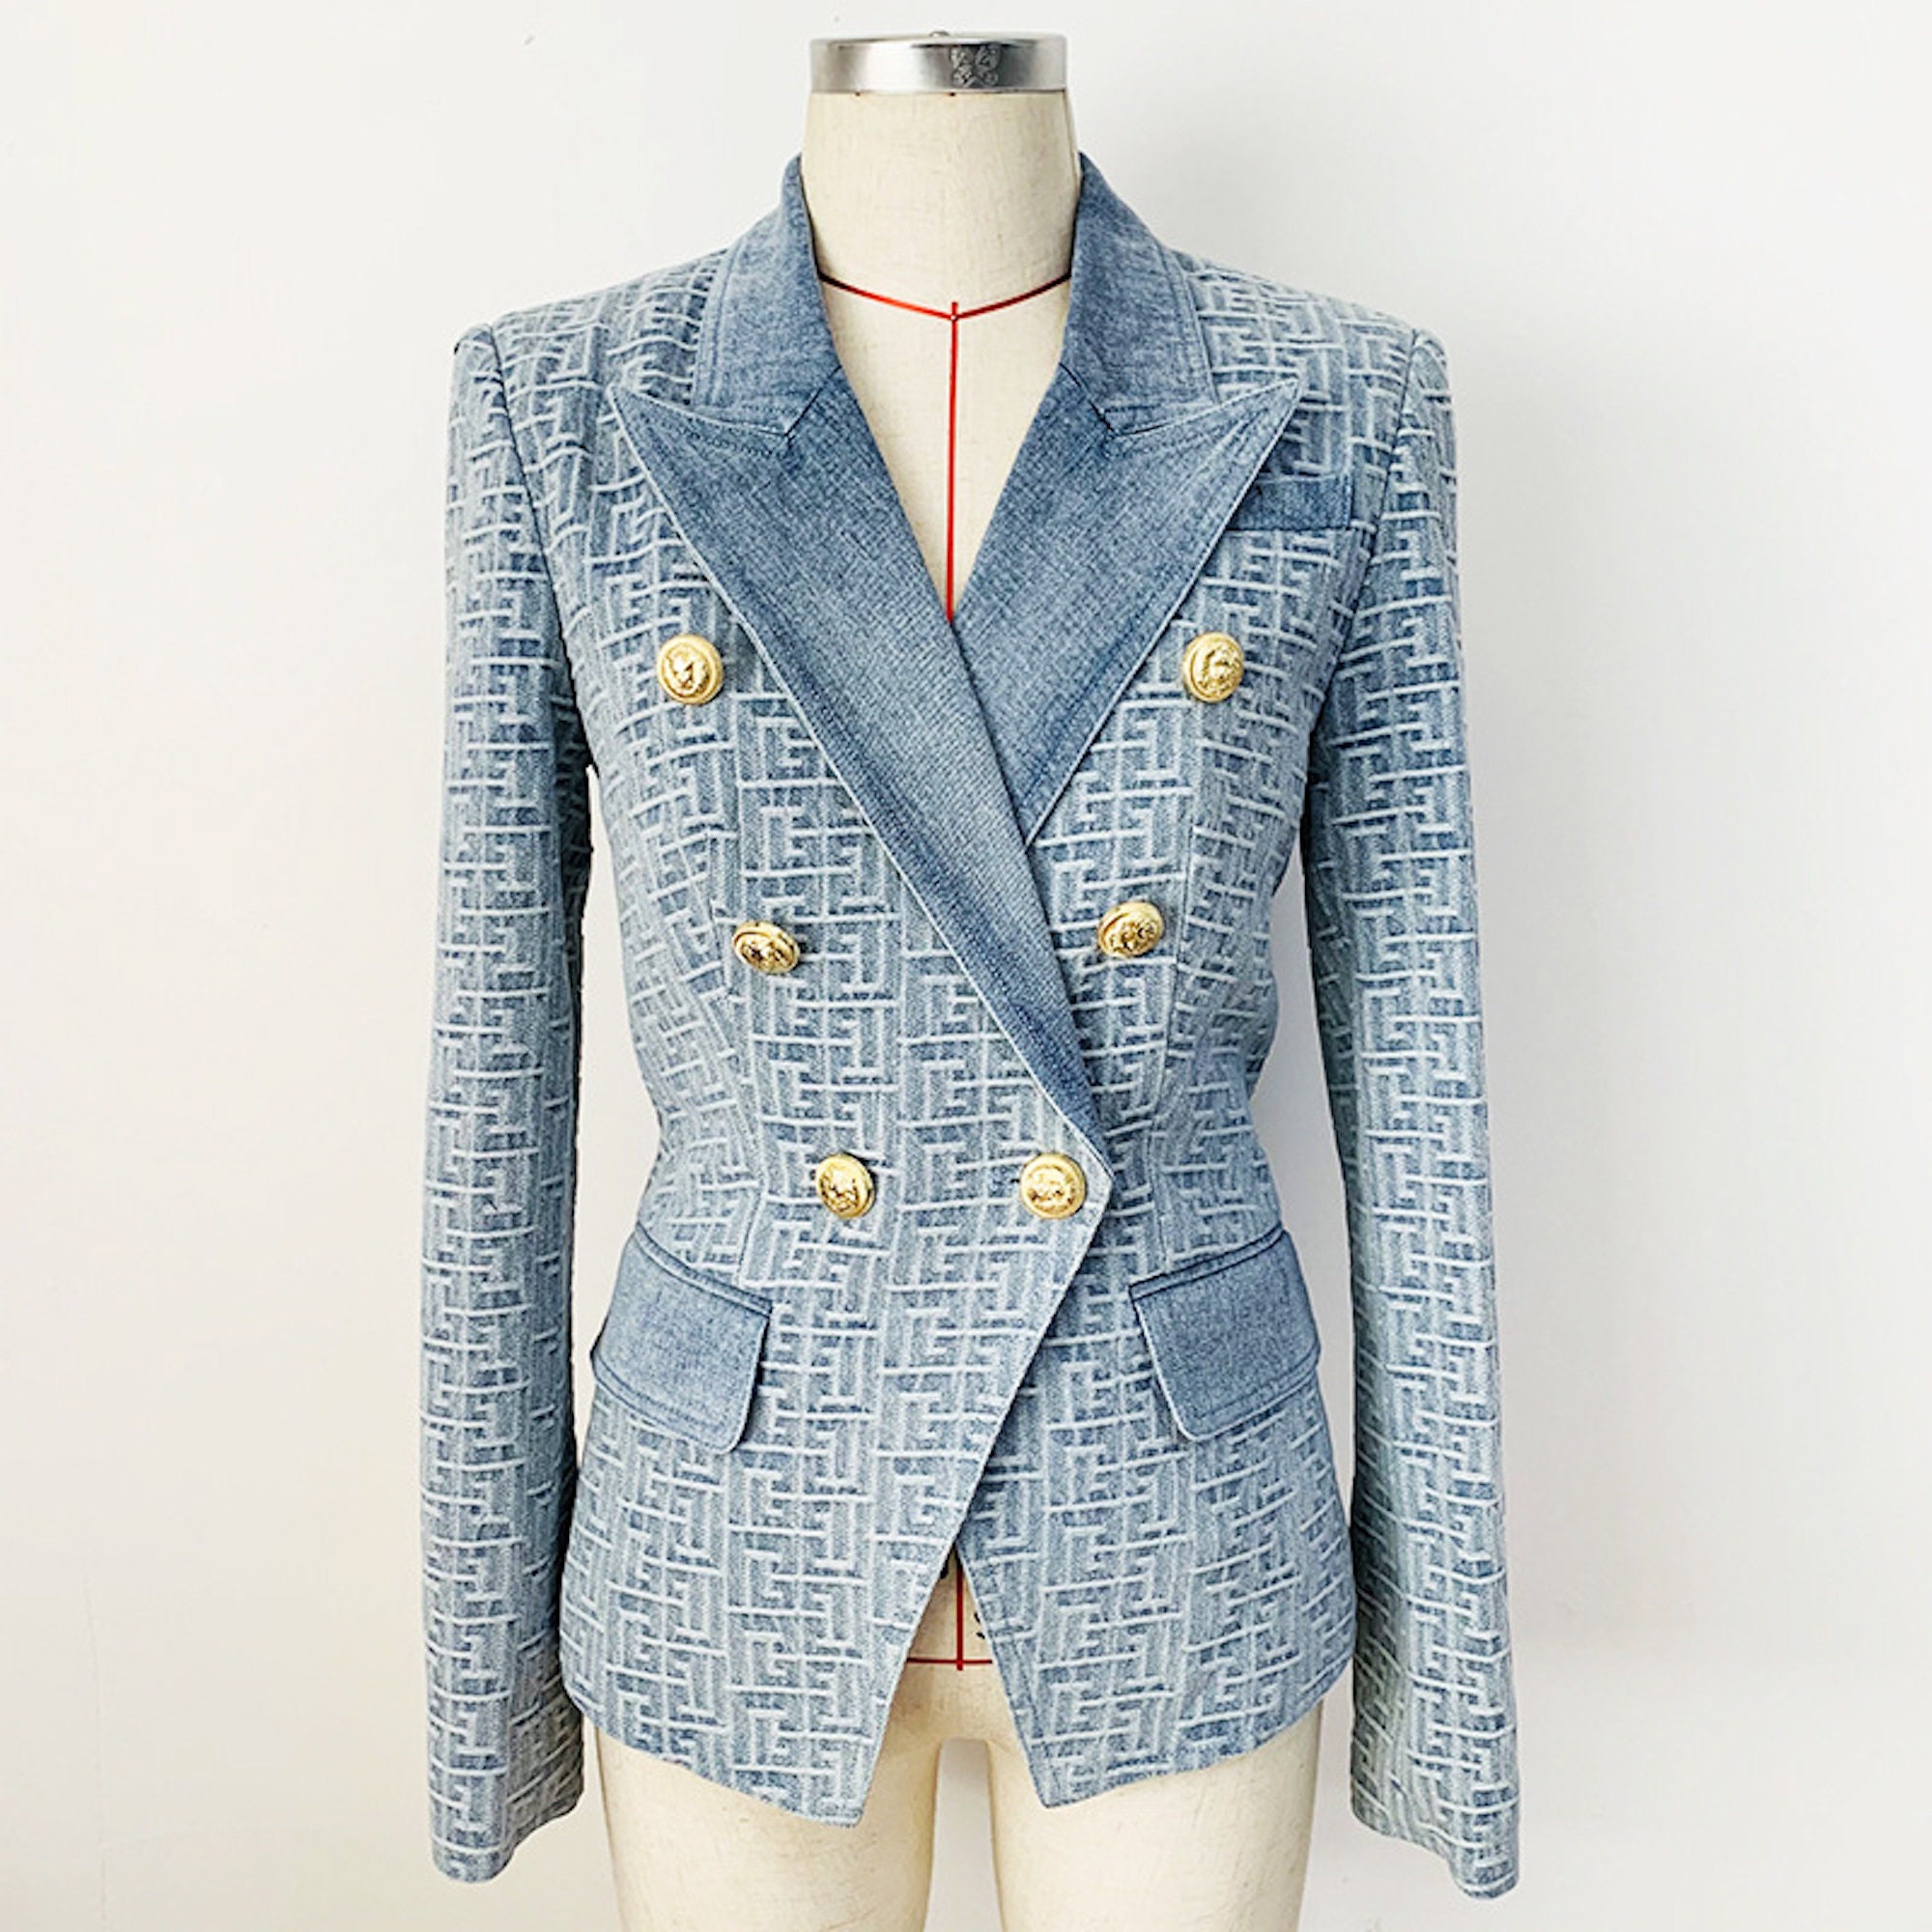 Tweed jacket Chanel Multicolour size 38 FR in Tweed - 23374868